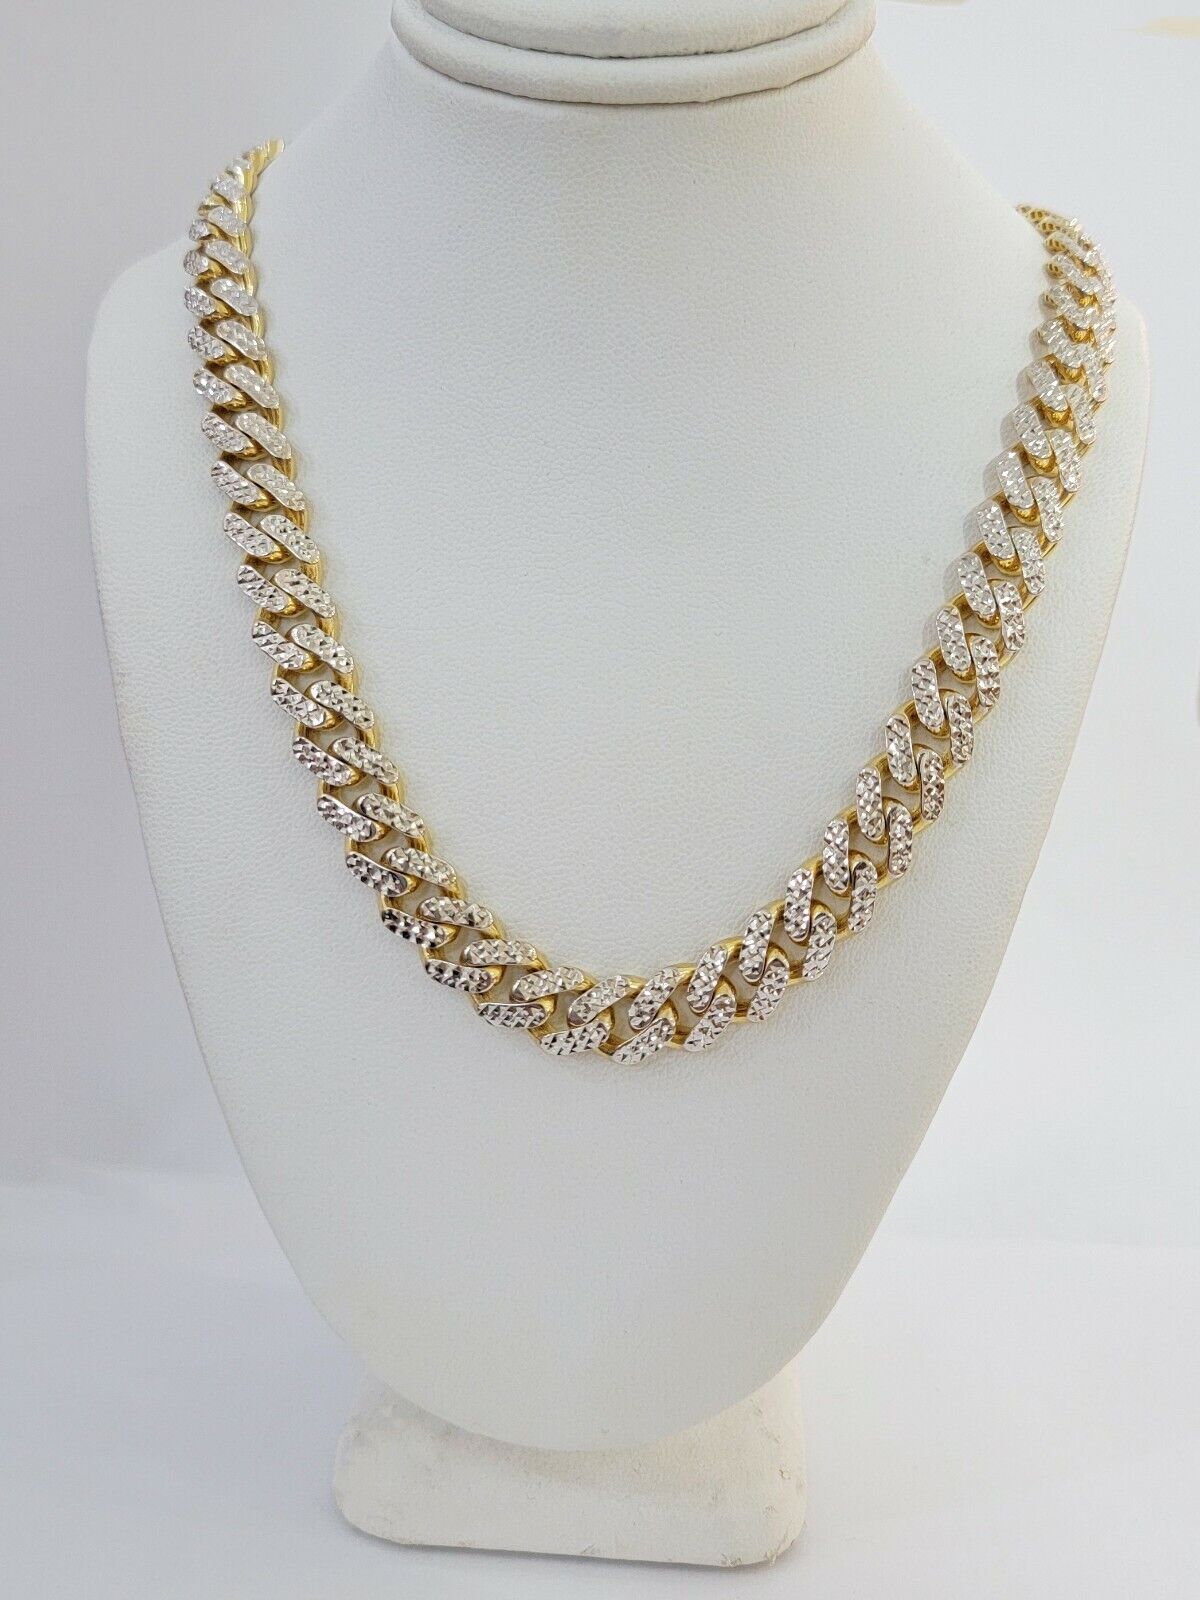 10k Gold Monaco Chain Necklace 7mm 22